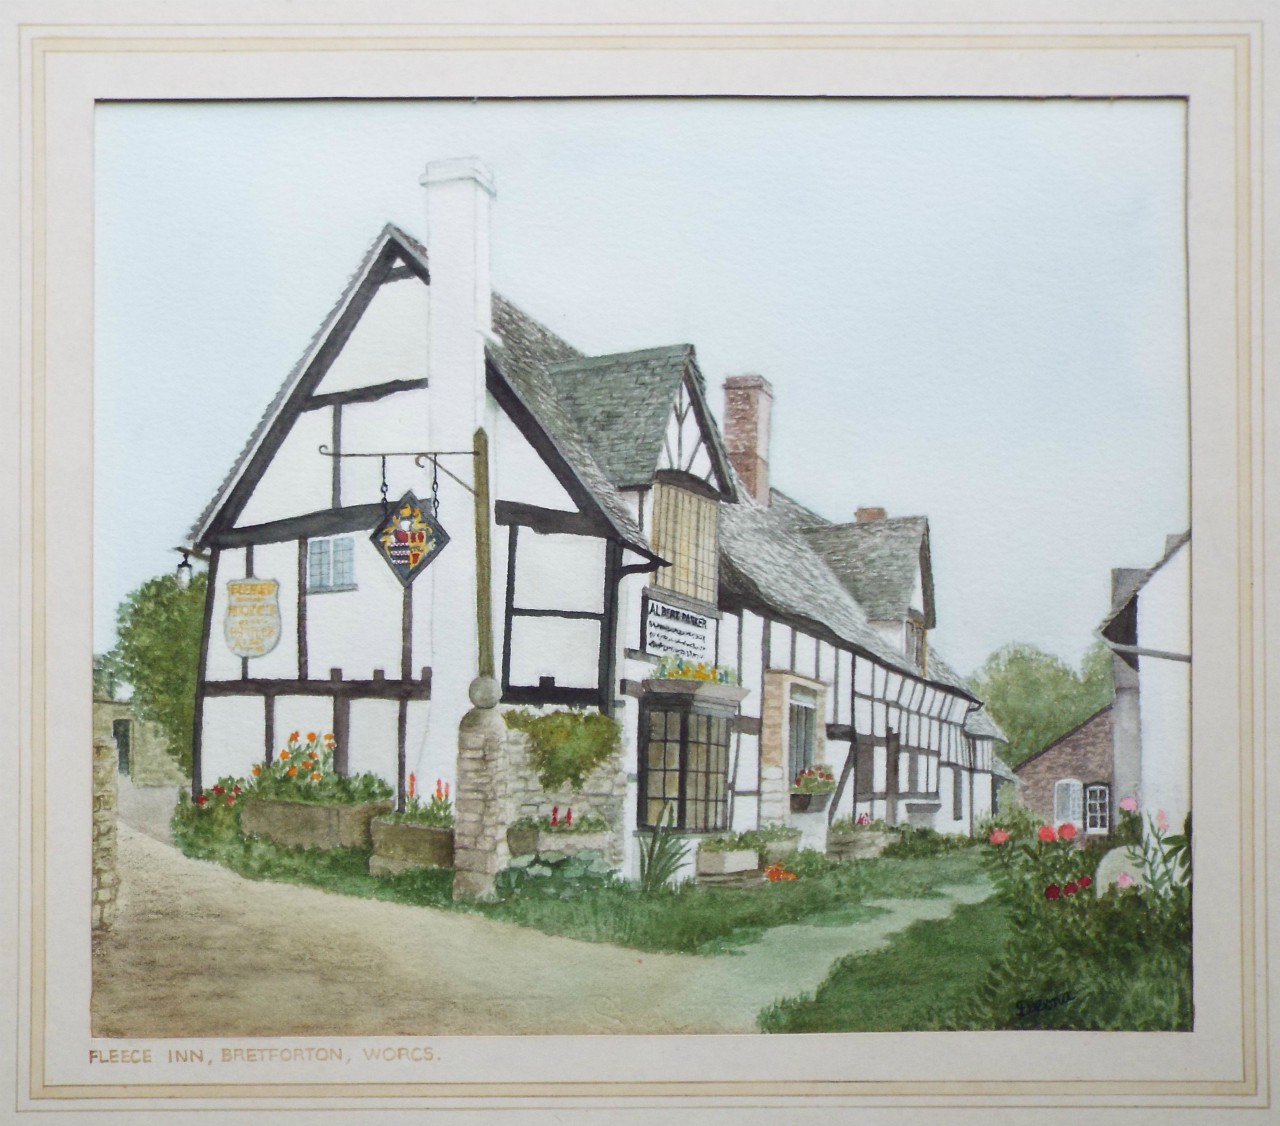 Watercolour - Fleece Inn, Bretforton, Worcs.